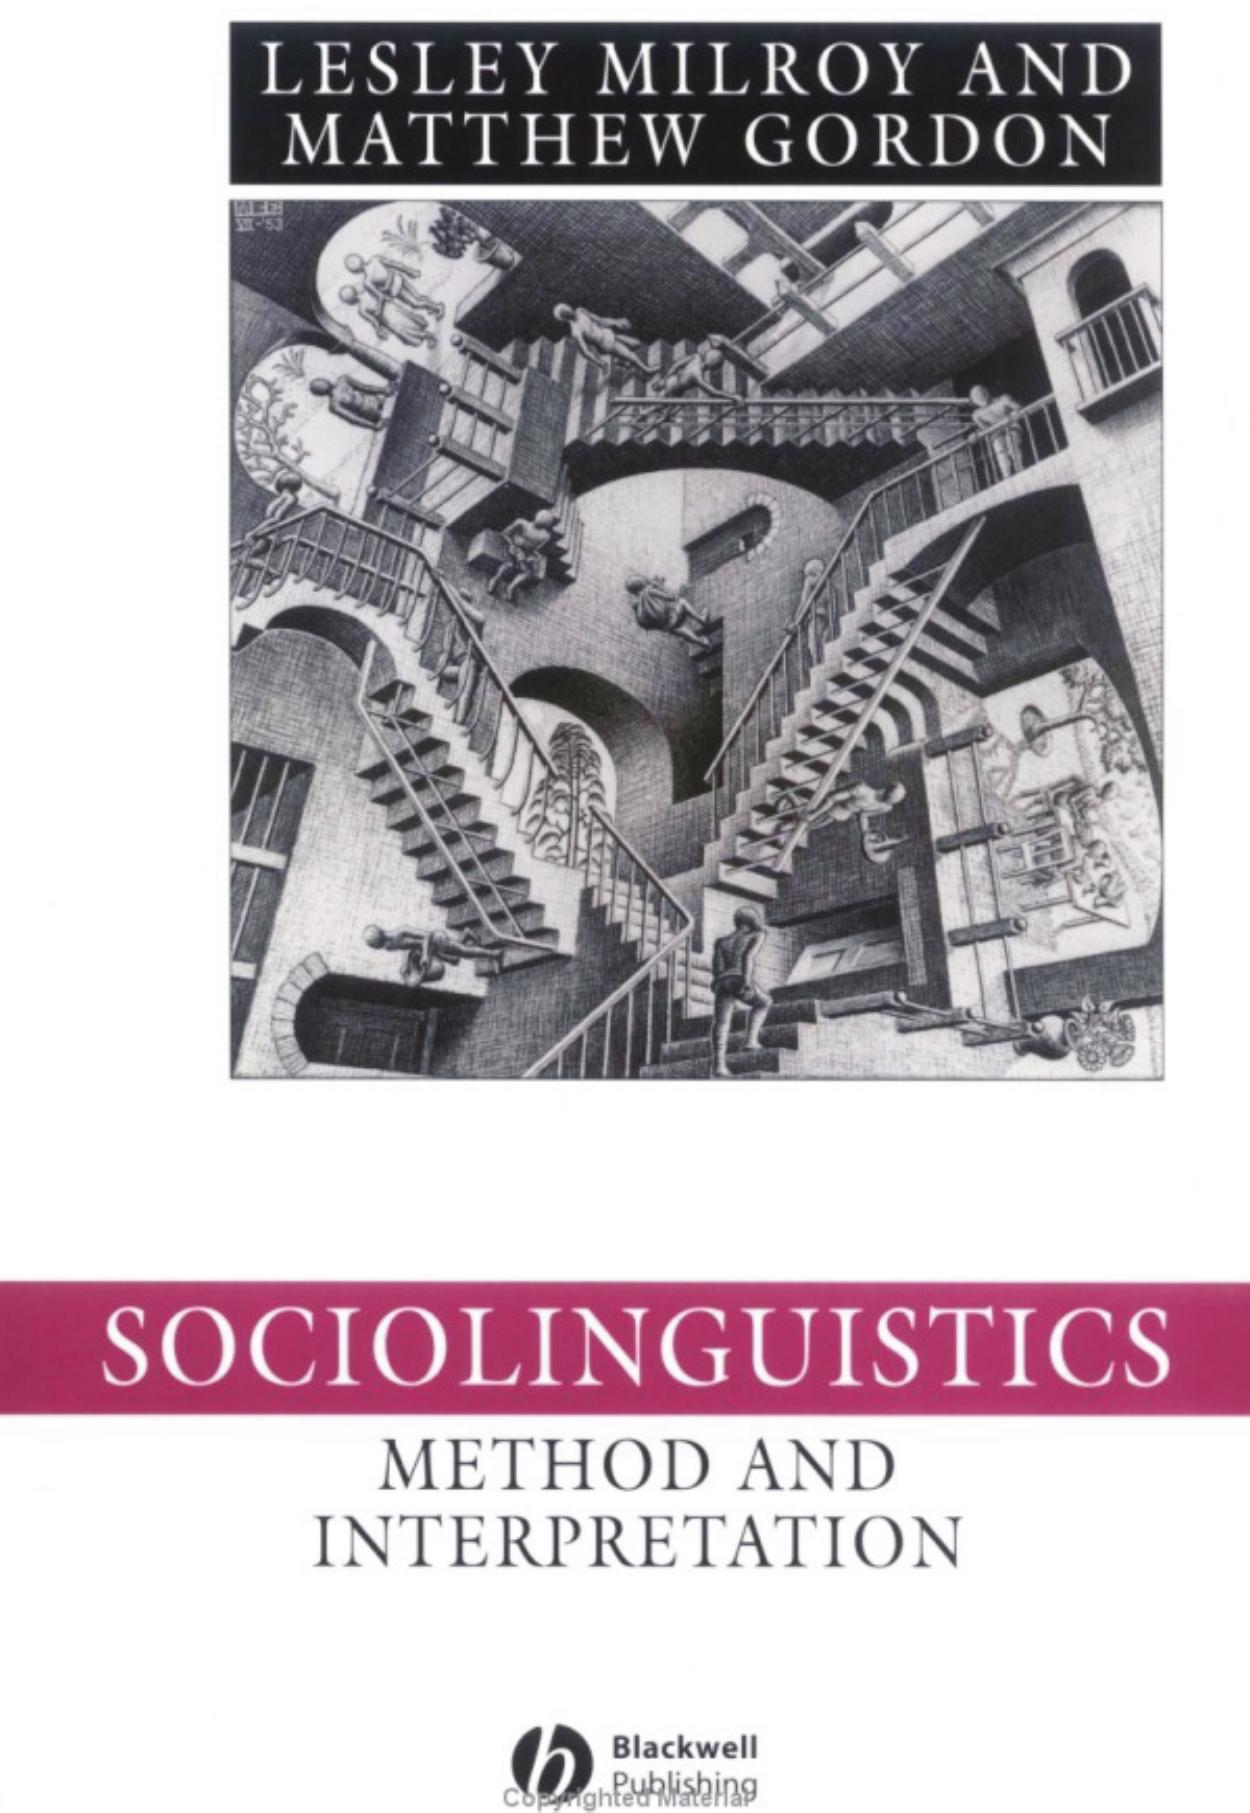 Sociolinguistics: Method and Interpretation